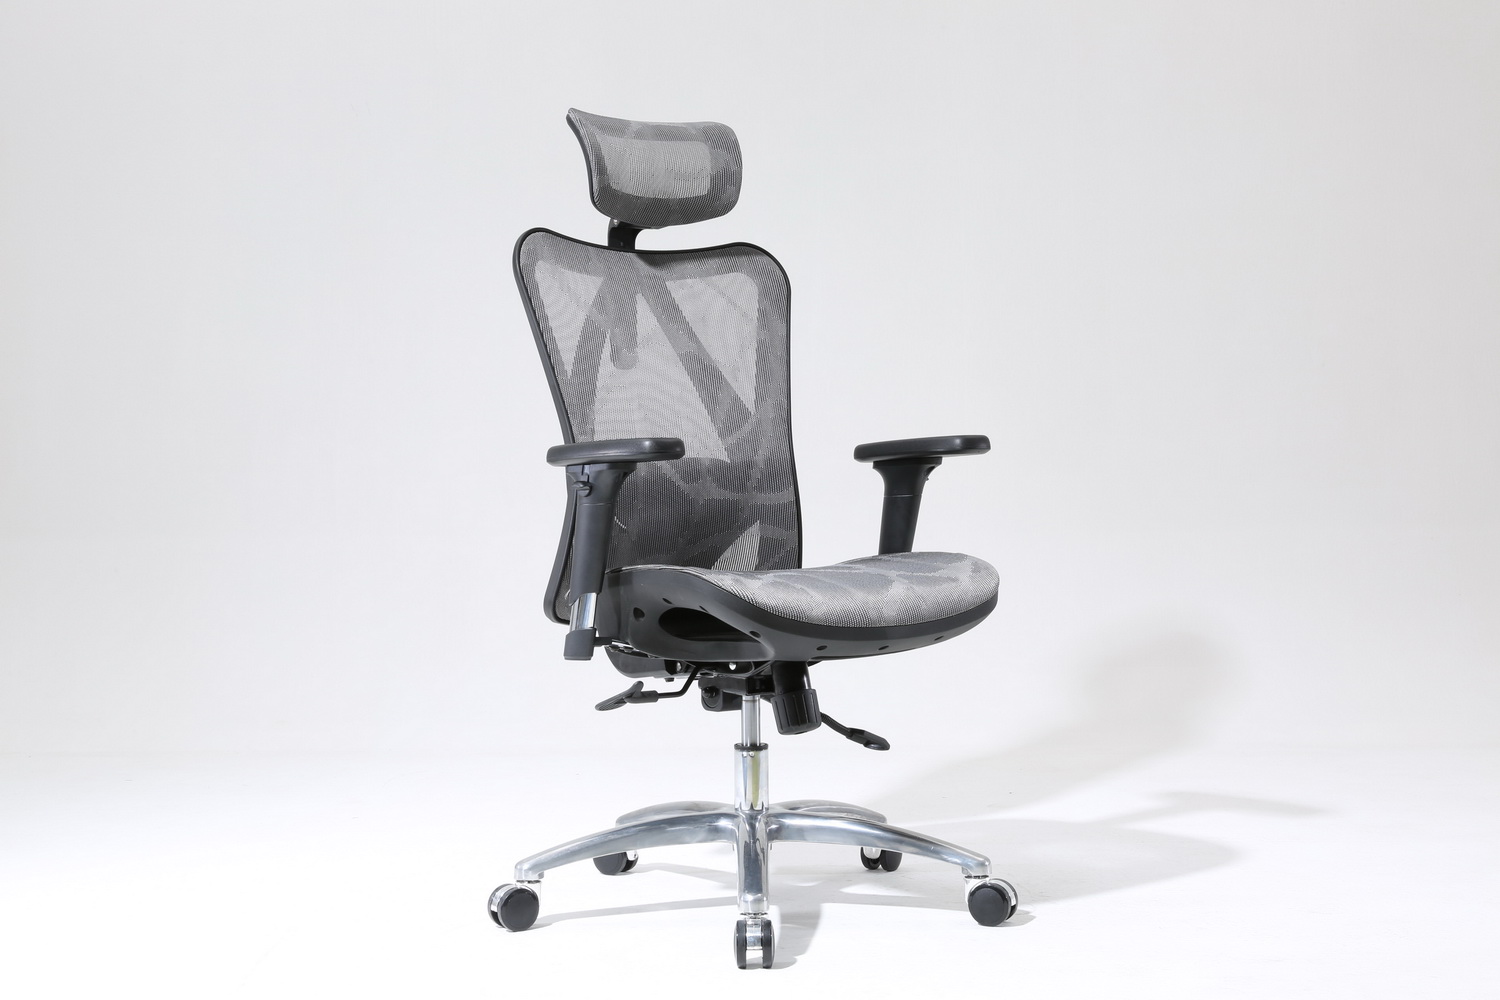 SIHOO M57 Ergonomic Mesh Seat, Headrest, Armrest - Grey